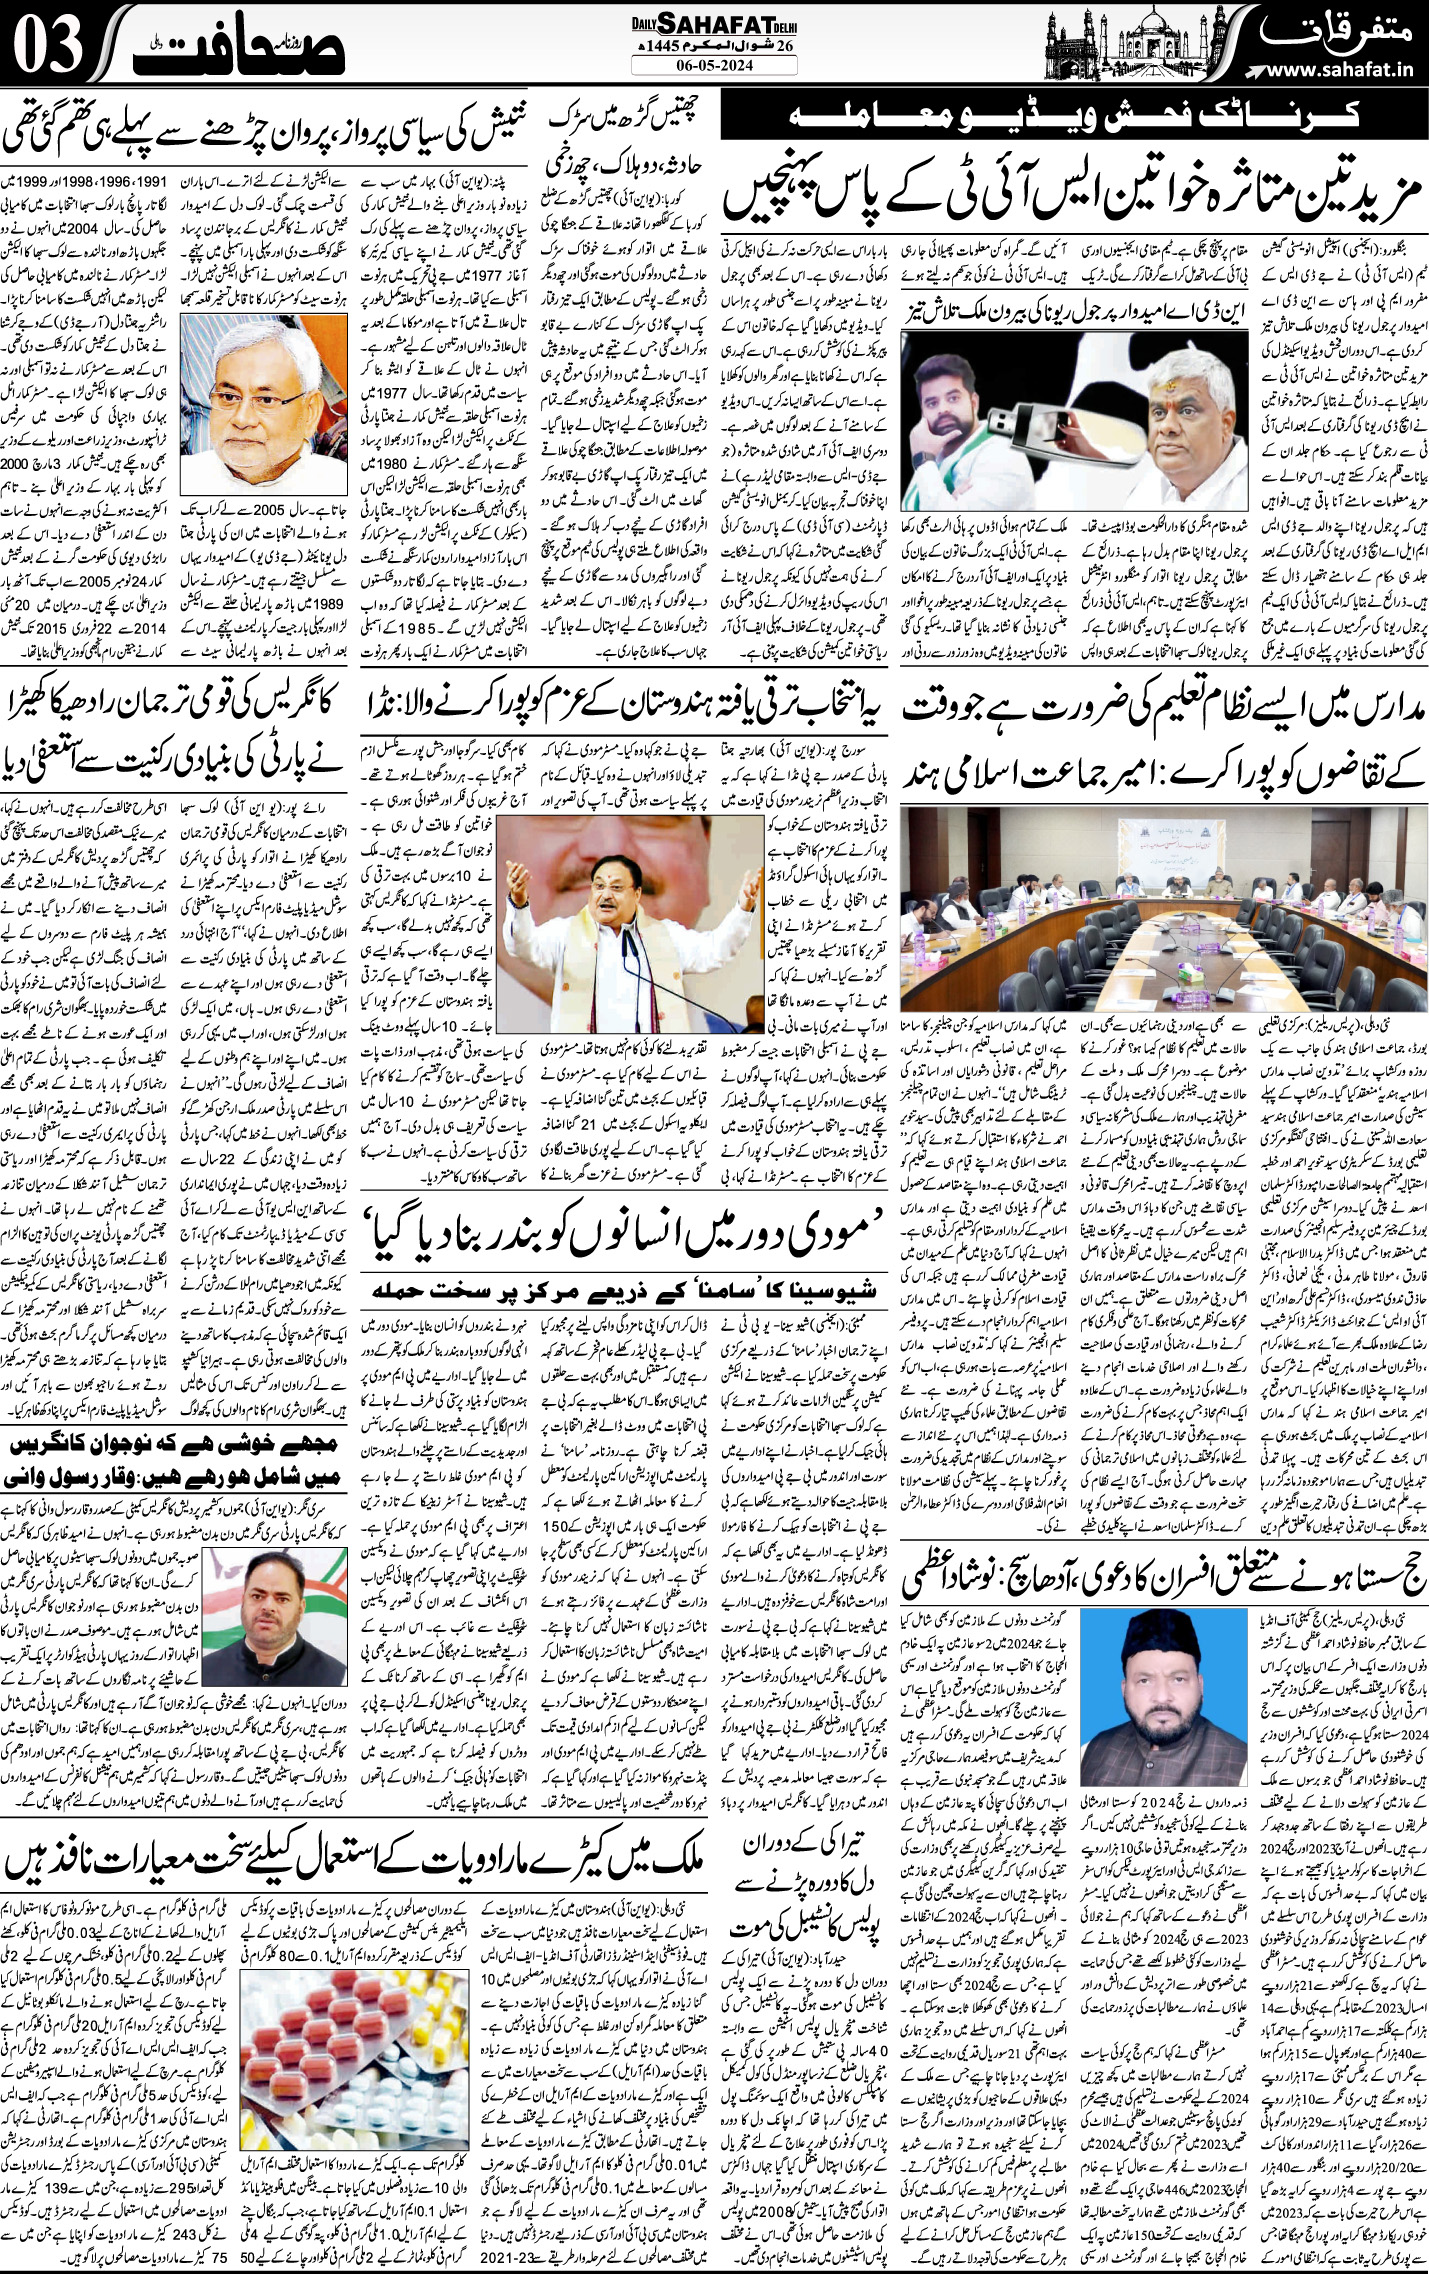 The Sahafat Urdu Daily, Delhi Edition, Delhi Urdu Epaper India, Bharat, Hindustan, Urdu Newspapers